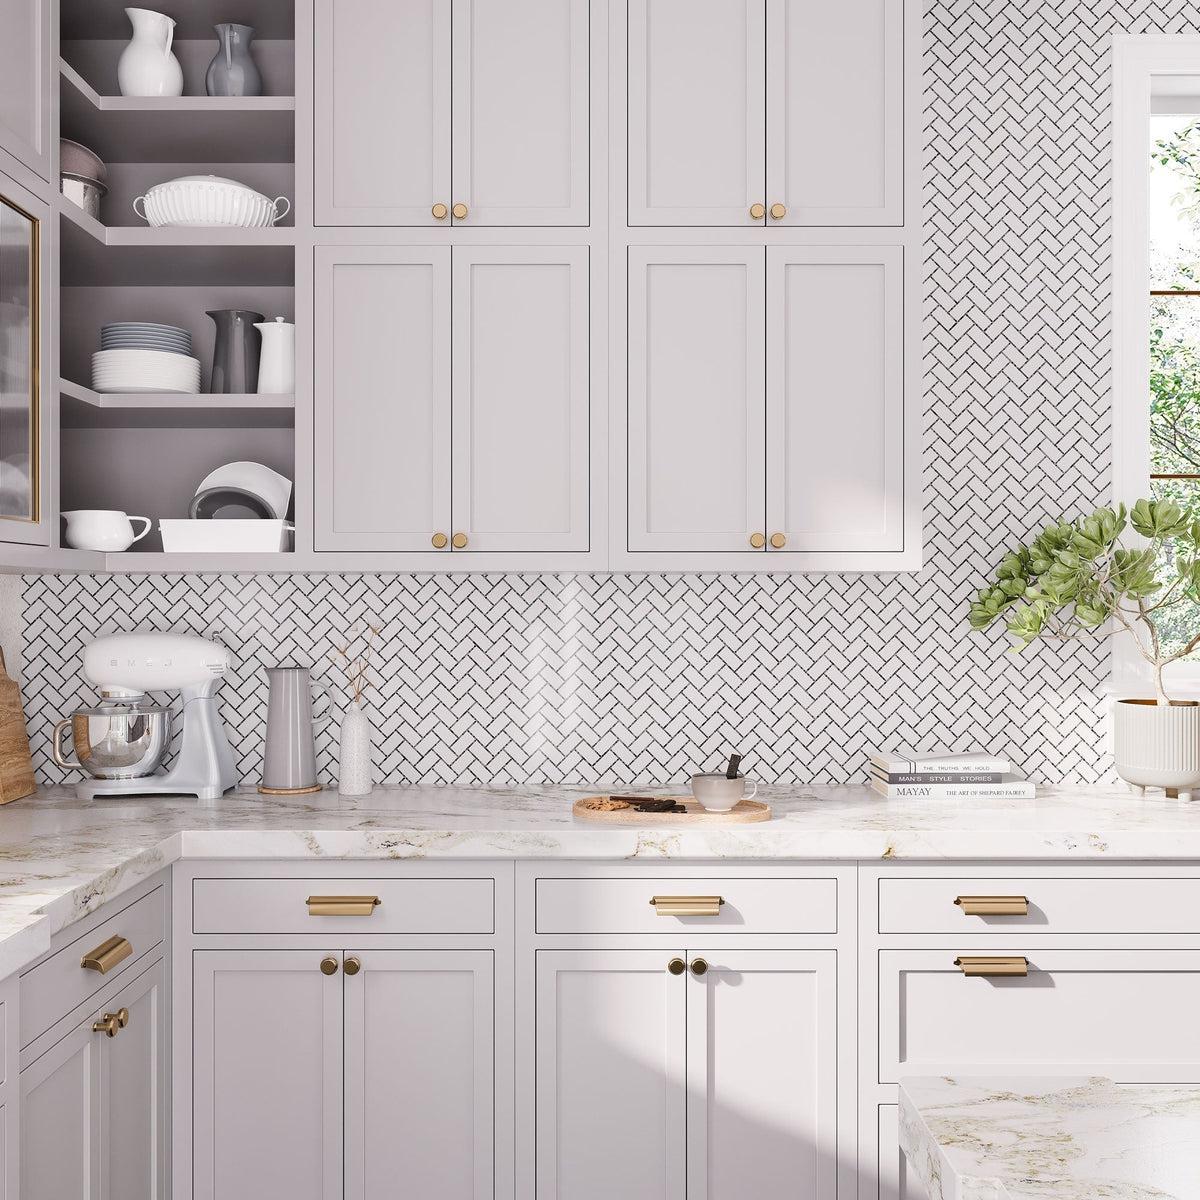 White kitchen with gray marble tile backsplash